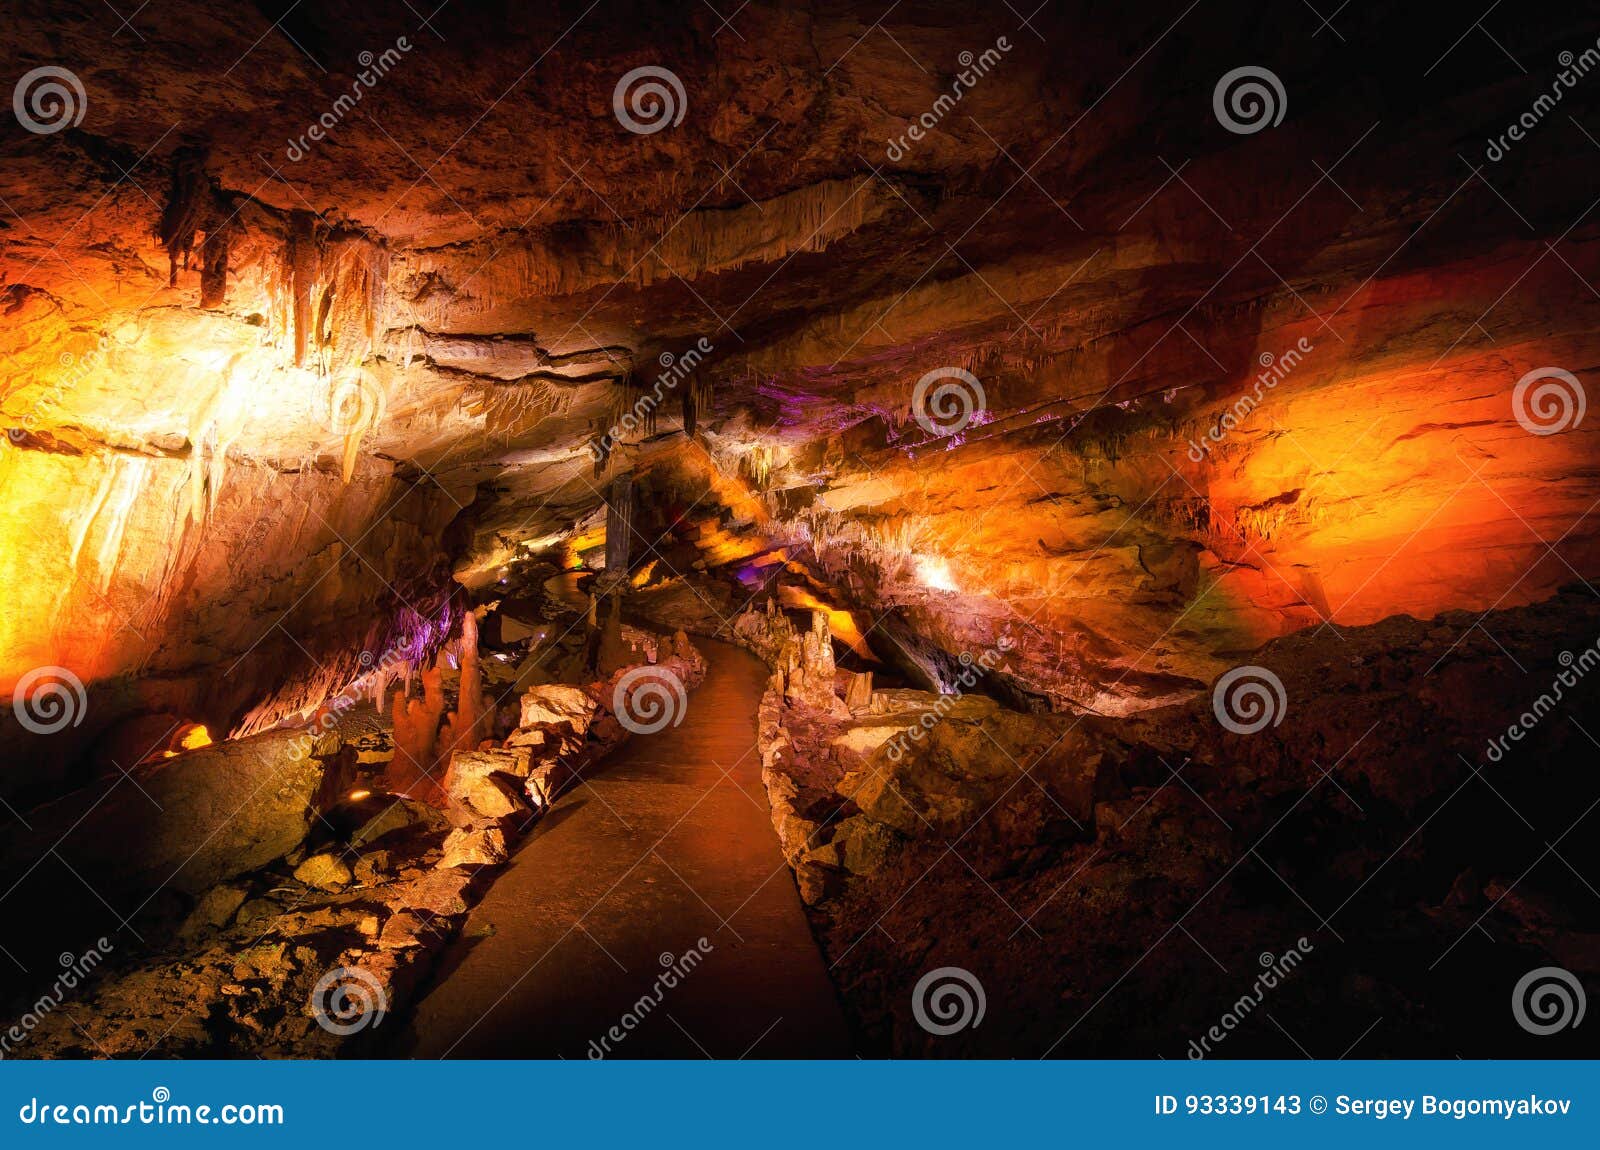 big cave in georgia, located near trieste, italy